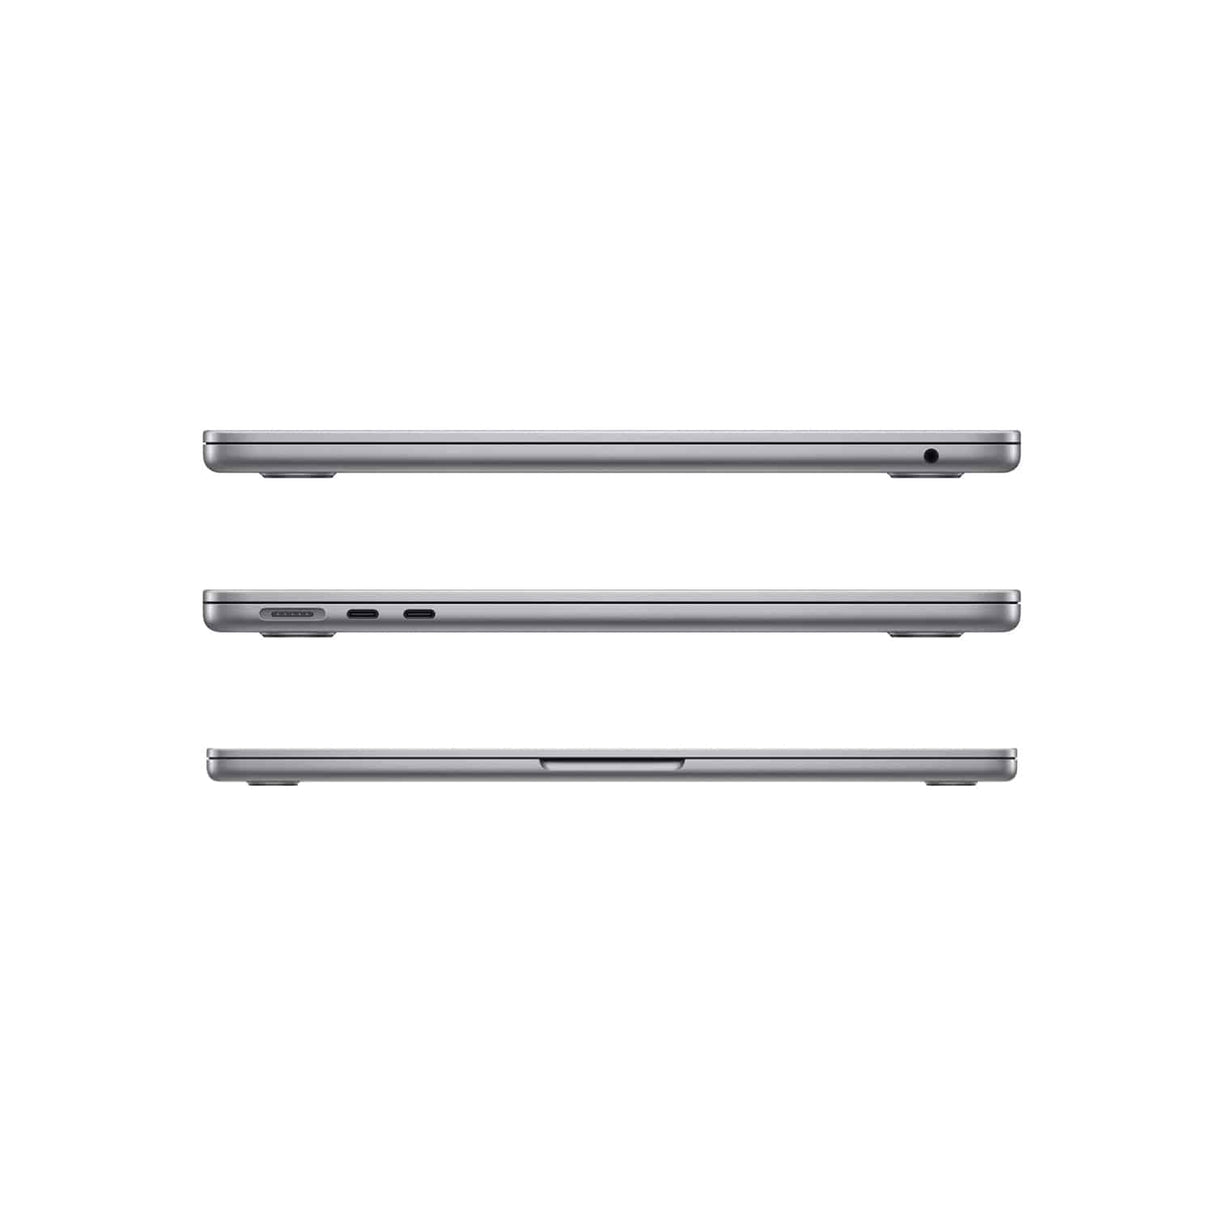 Macbook Pro A2338 Chip M2 Ram 16GB Disco 512GB SSD 13.3" Retina Touch Bar Gris Espacial Americano Caja Sellada